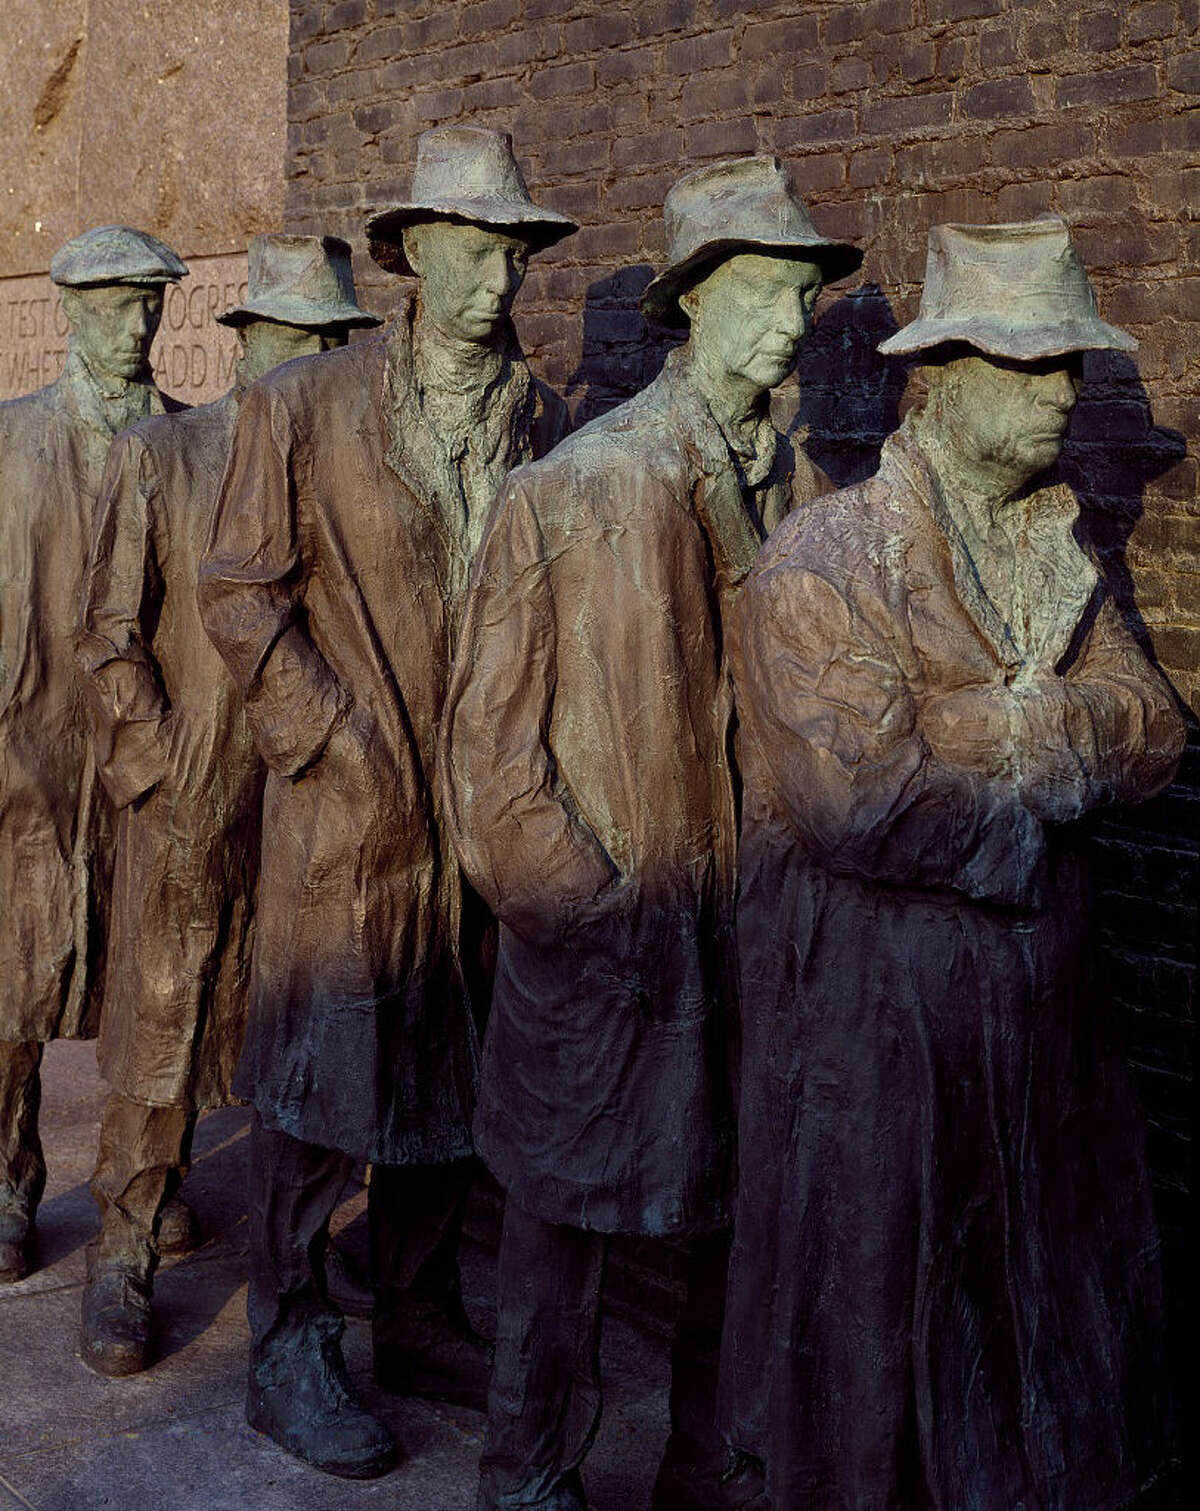 A sculpture depicting a Great Depression breadline at the Franklin Delano Roosevelt Memorial, Washington, D.C.